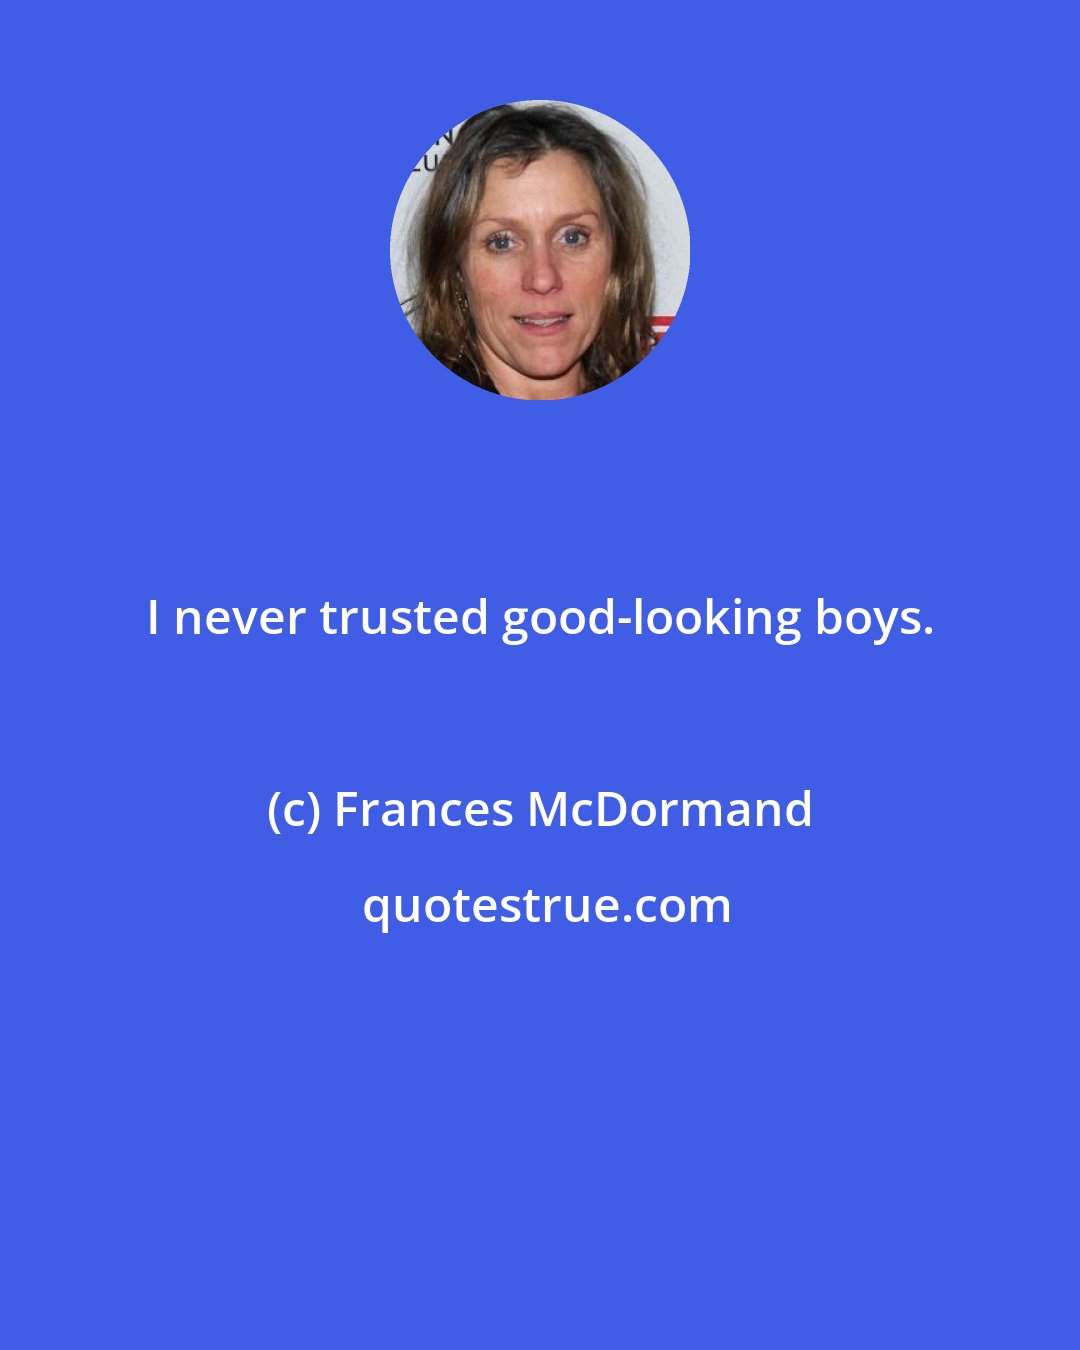 Frances McDormand: I never trusted good-looking boys.